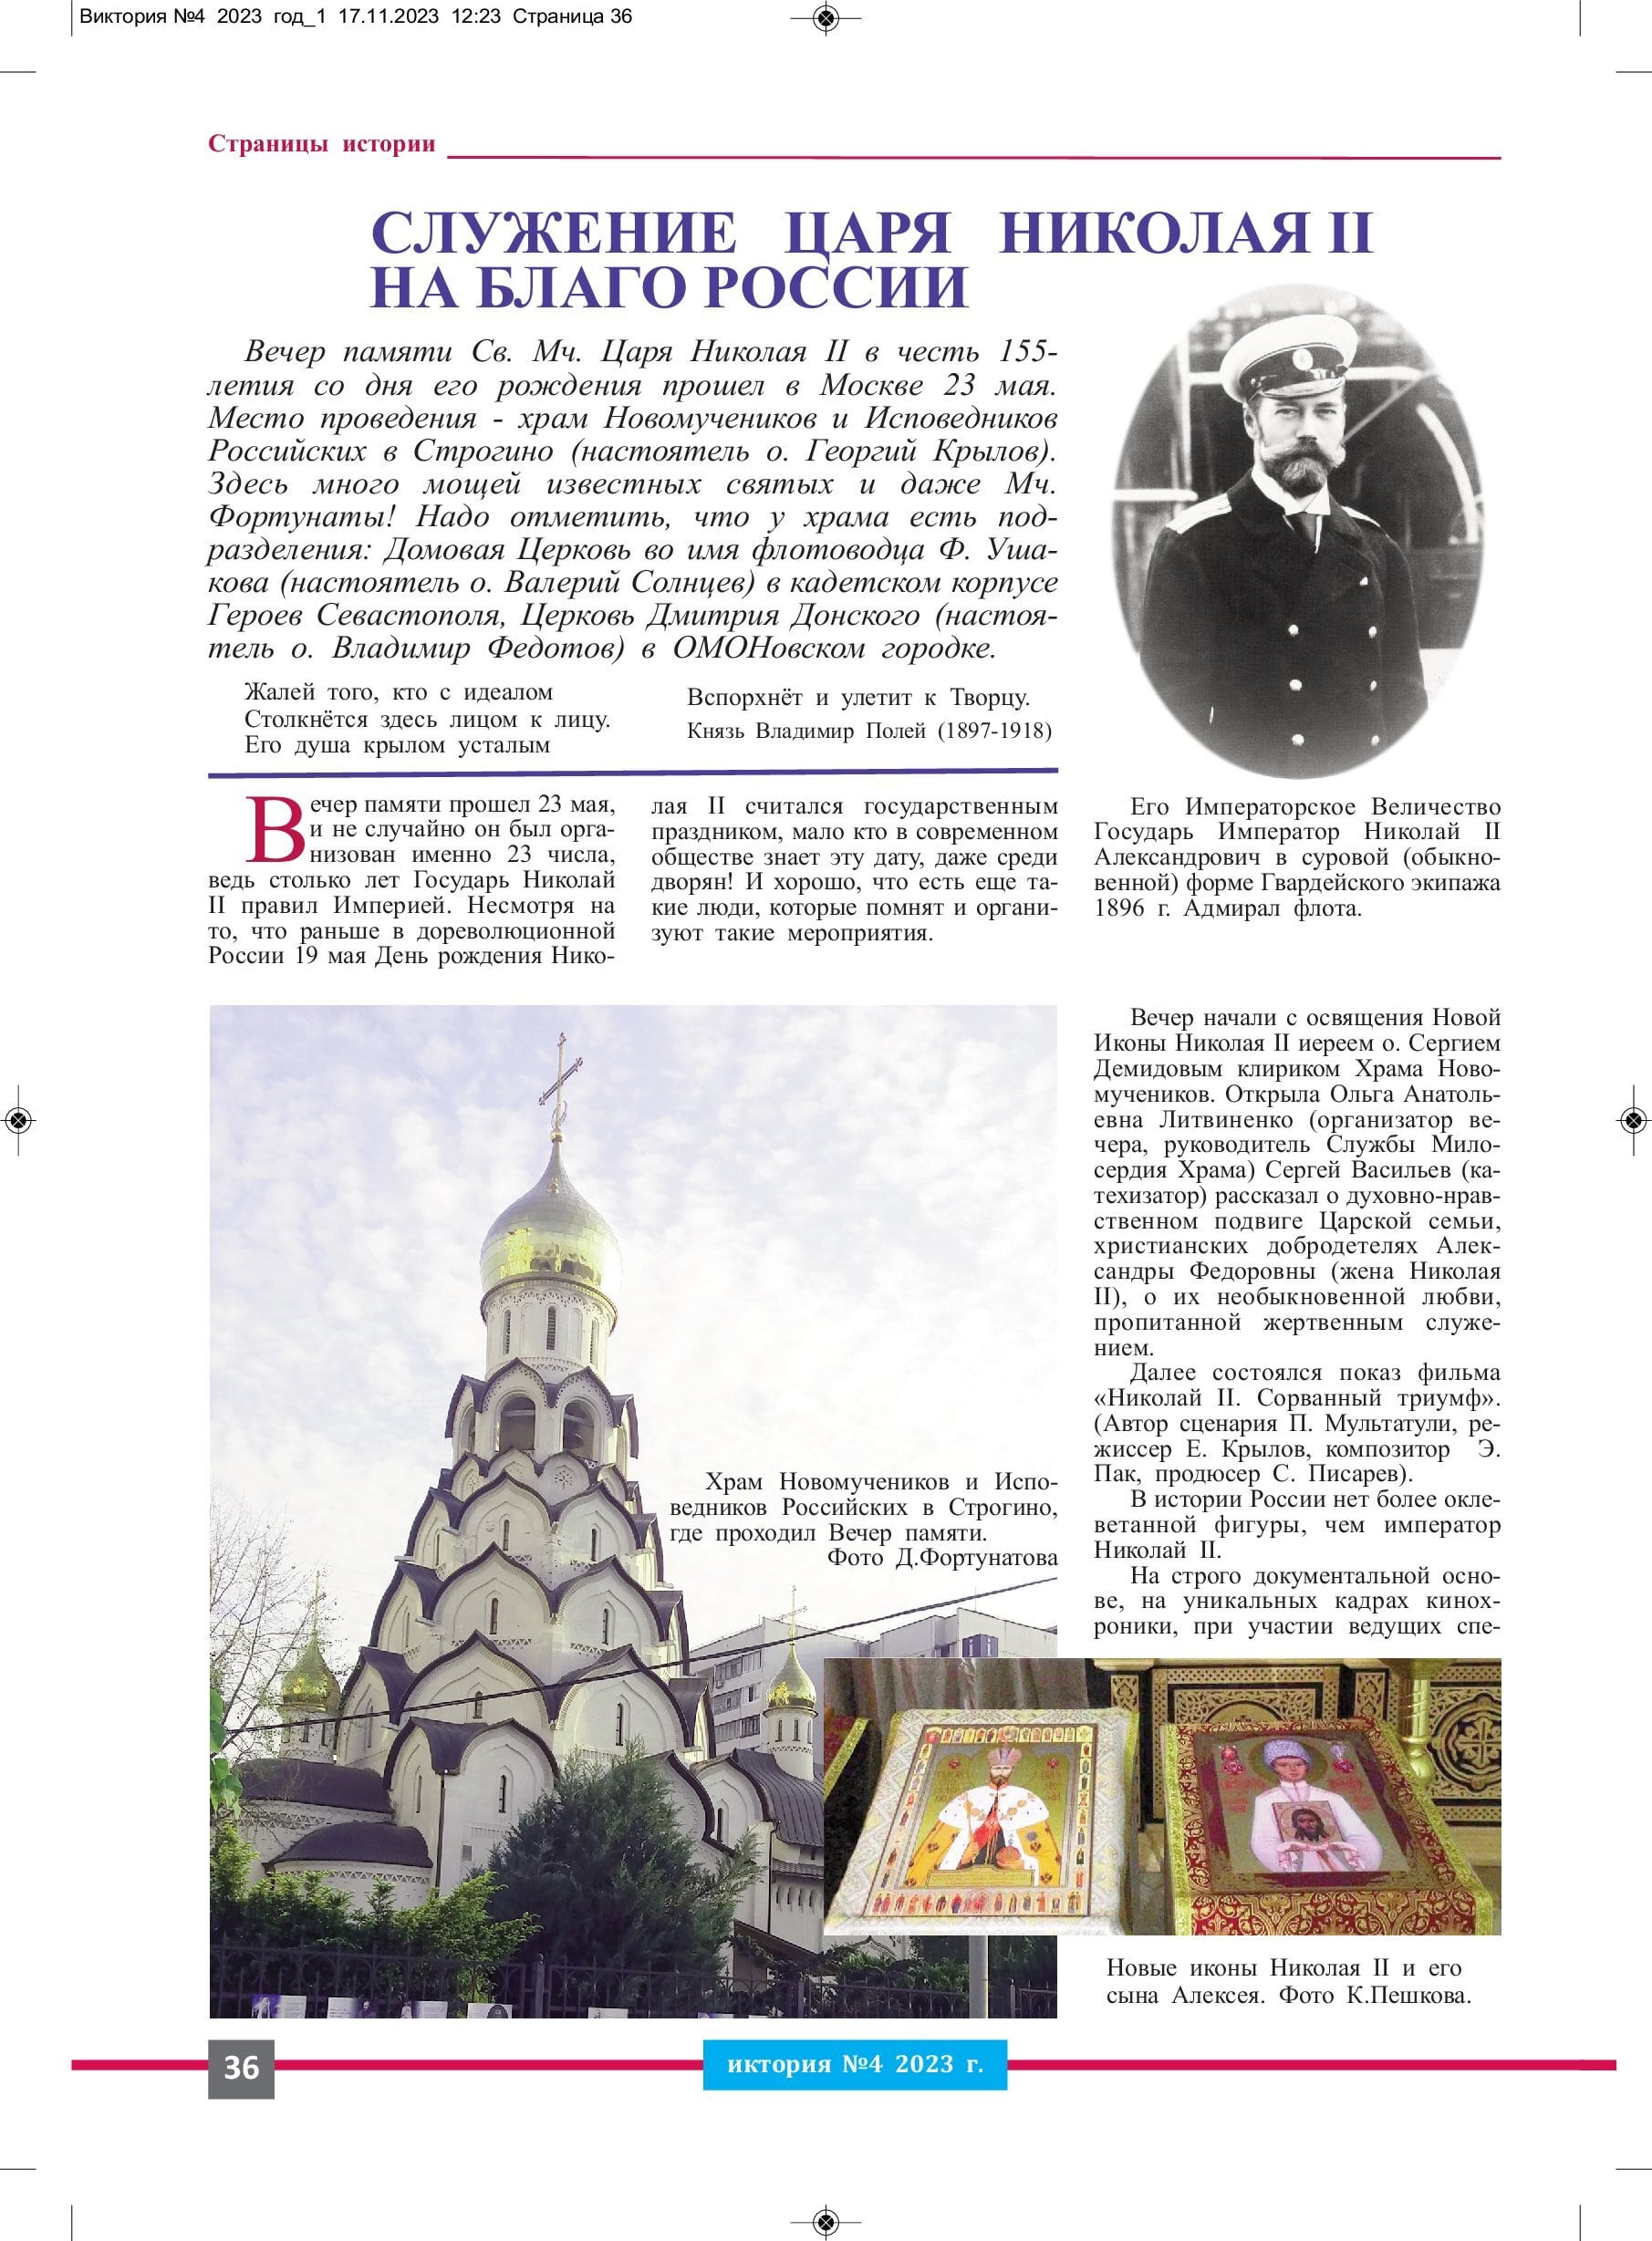 Служение  царя  Николая II на благо России! - фото 1